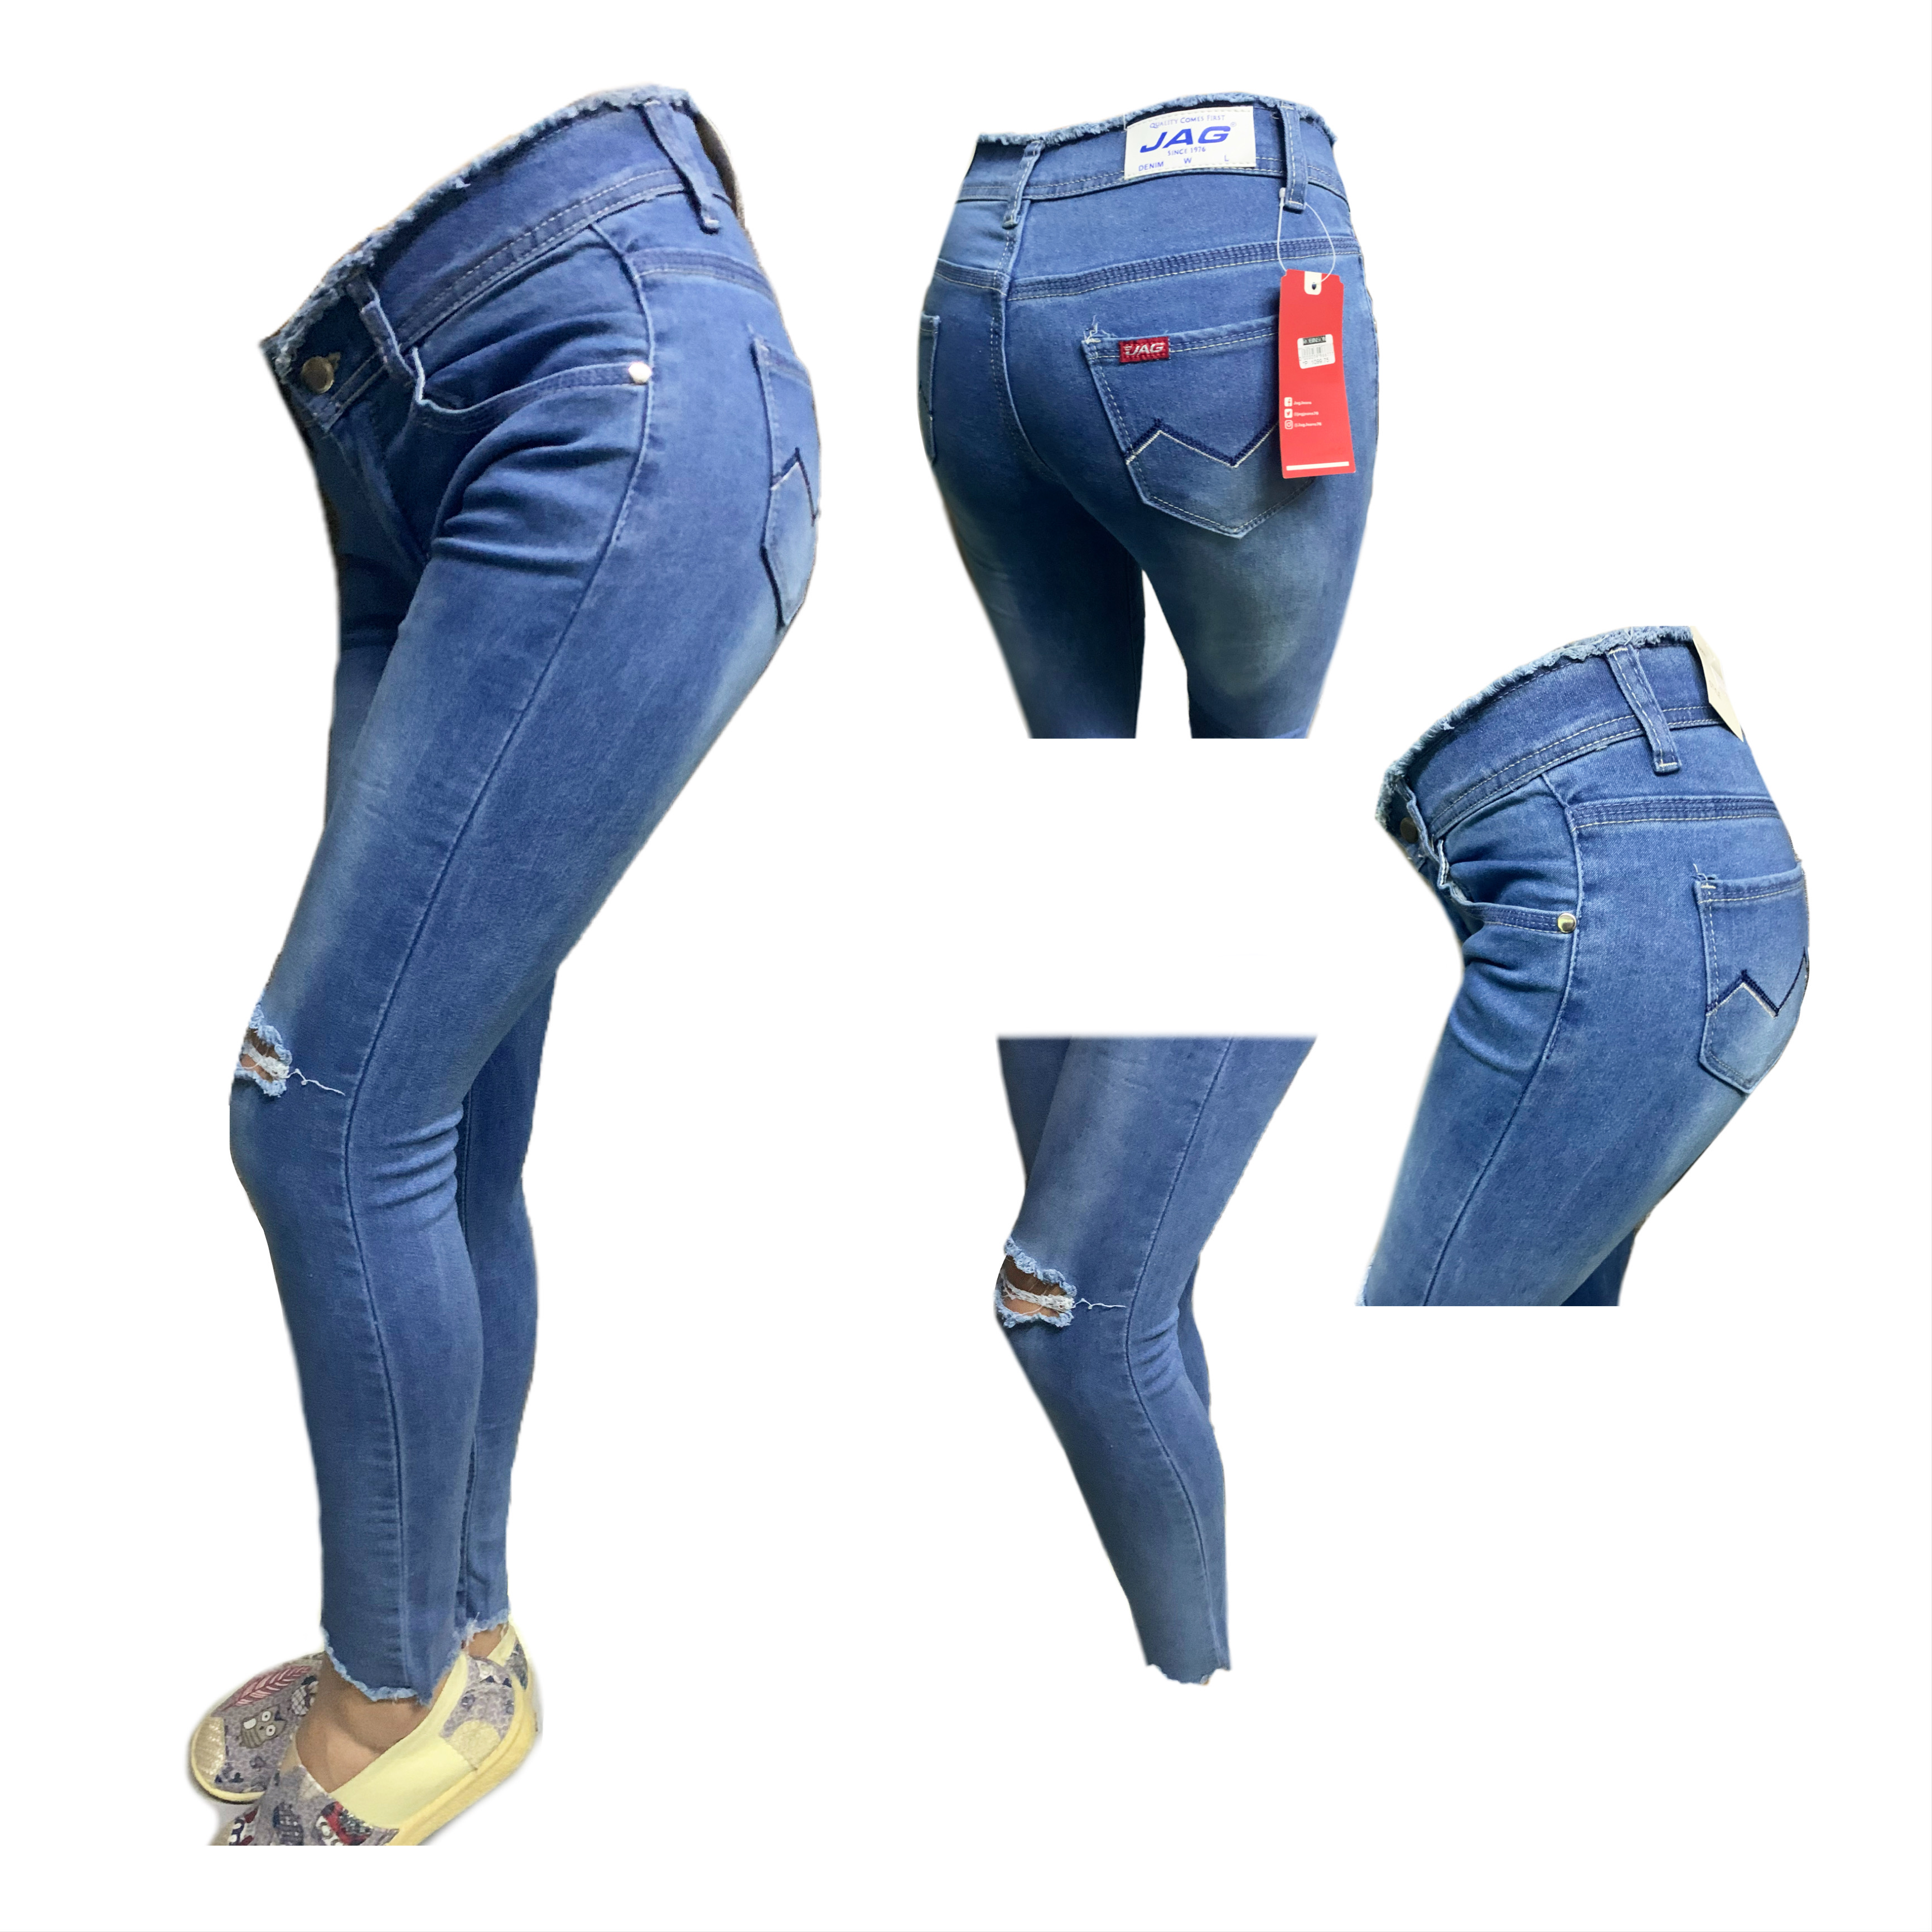 tattered skinny jeans